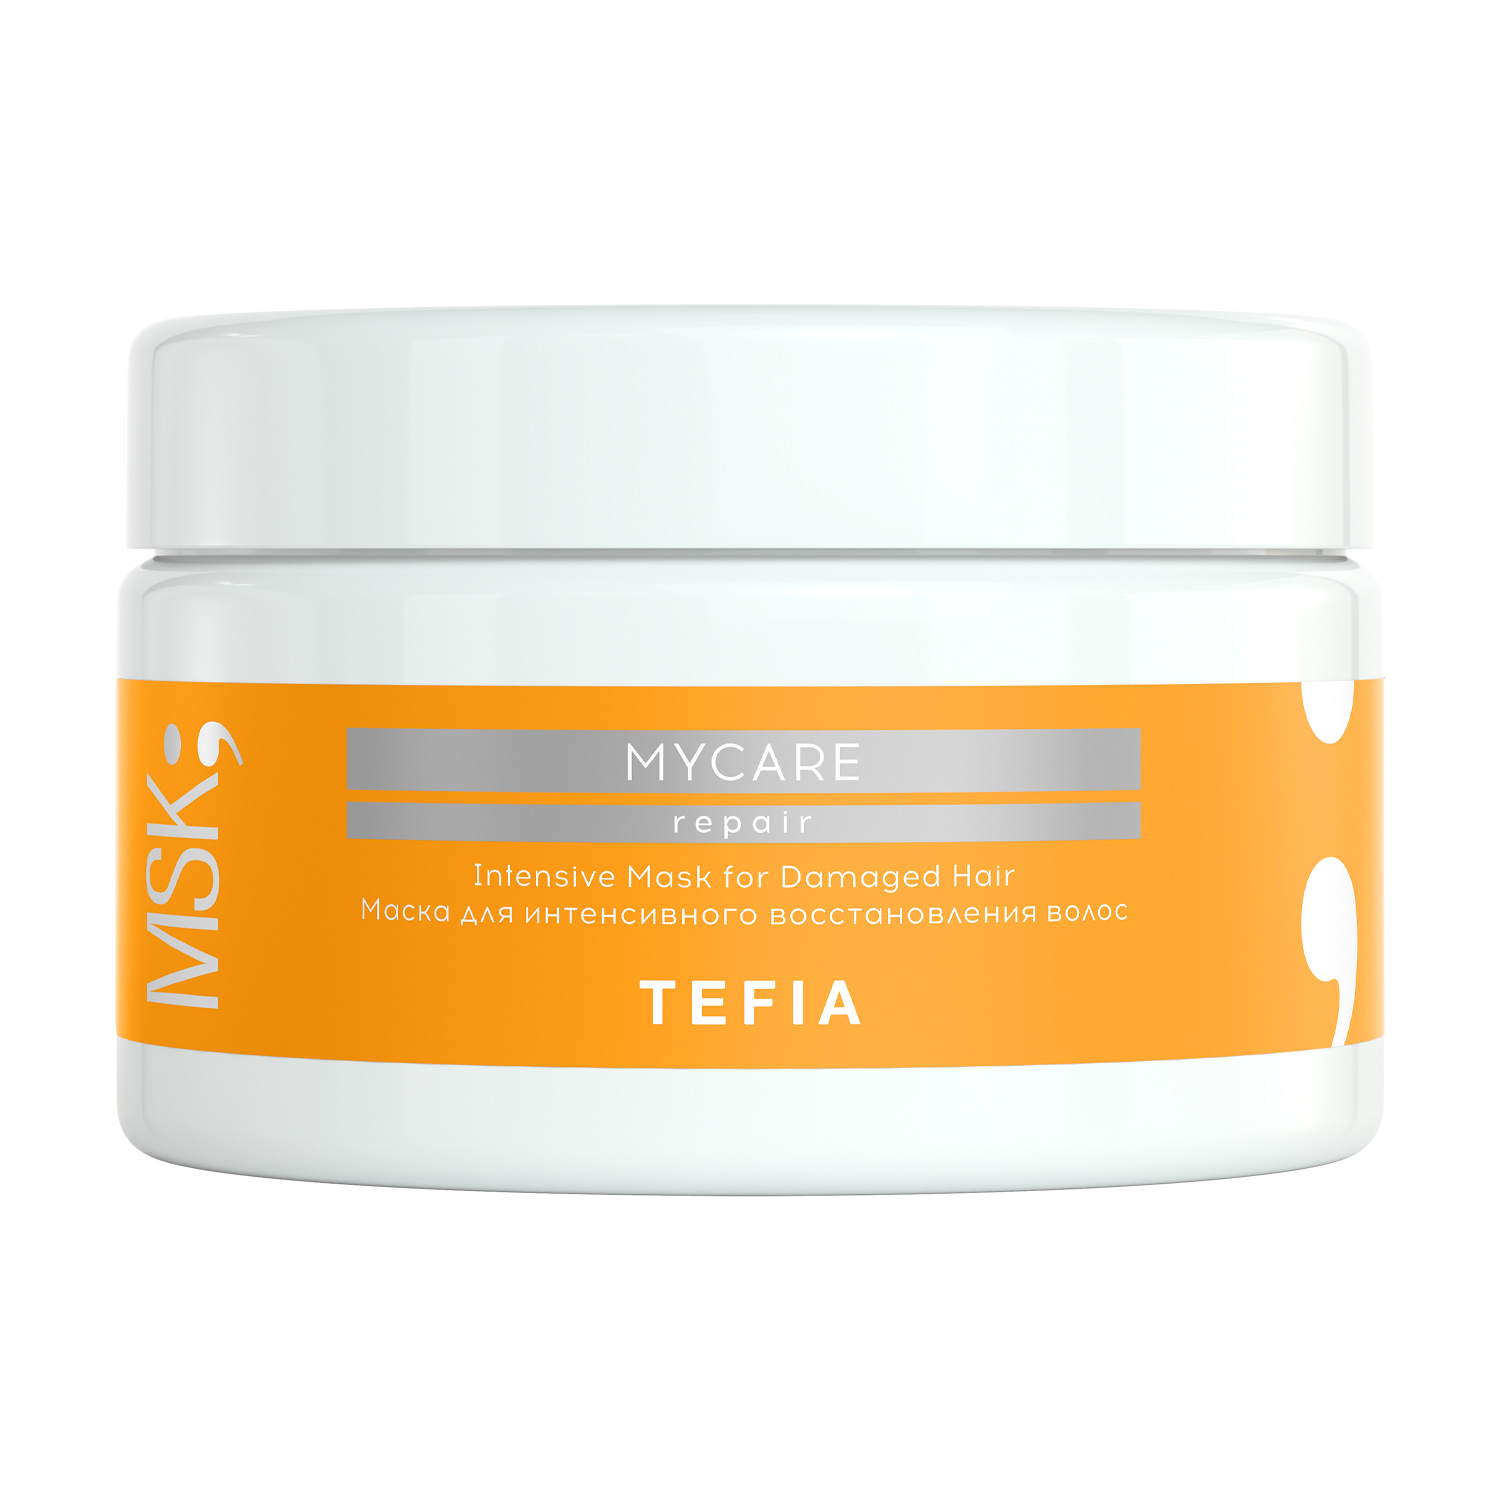 цена Tefia Маска для интенсивного восстановления волос, 250 мл (Tefia, Mycare)